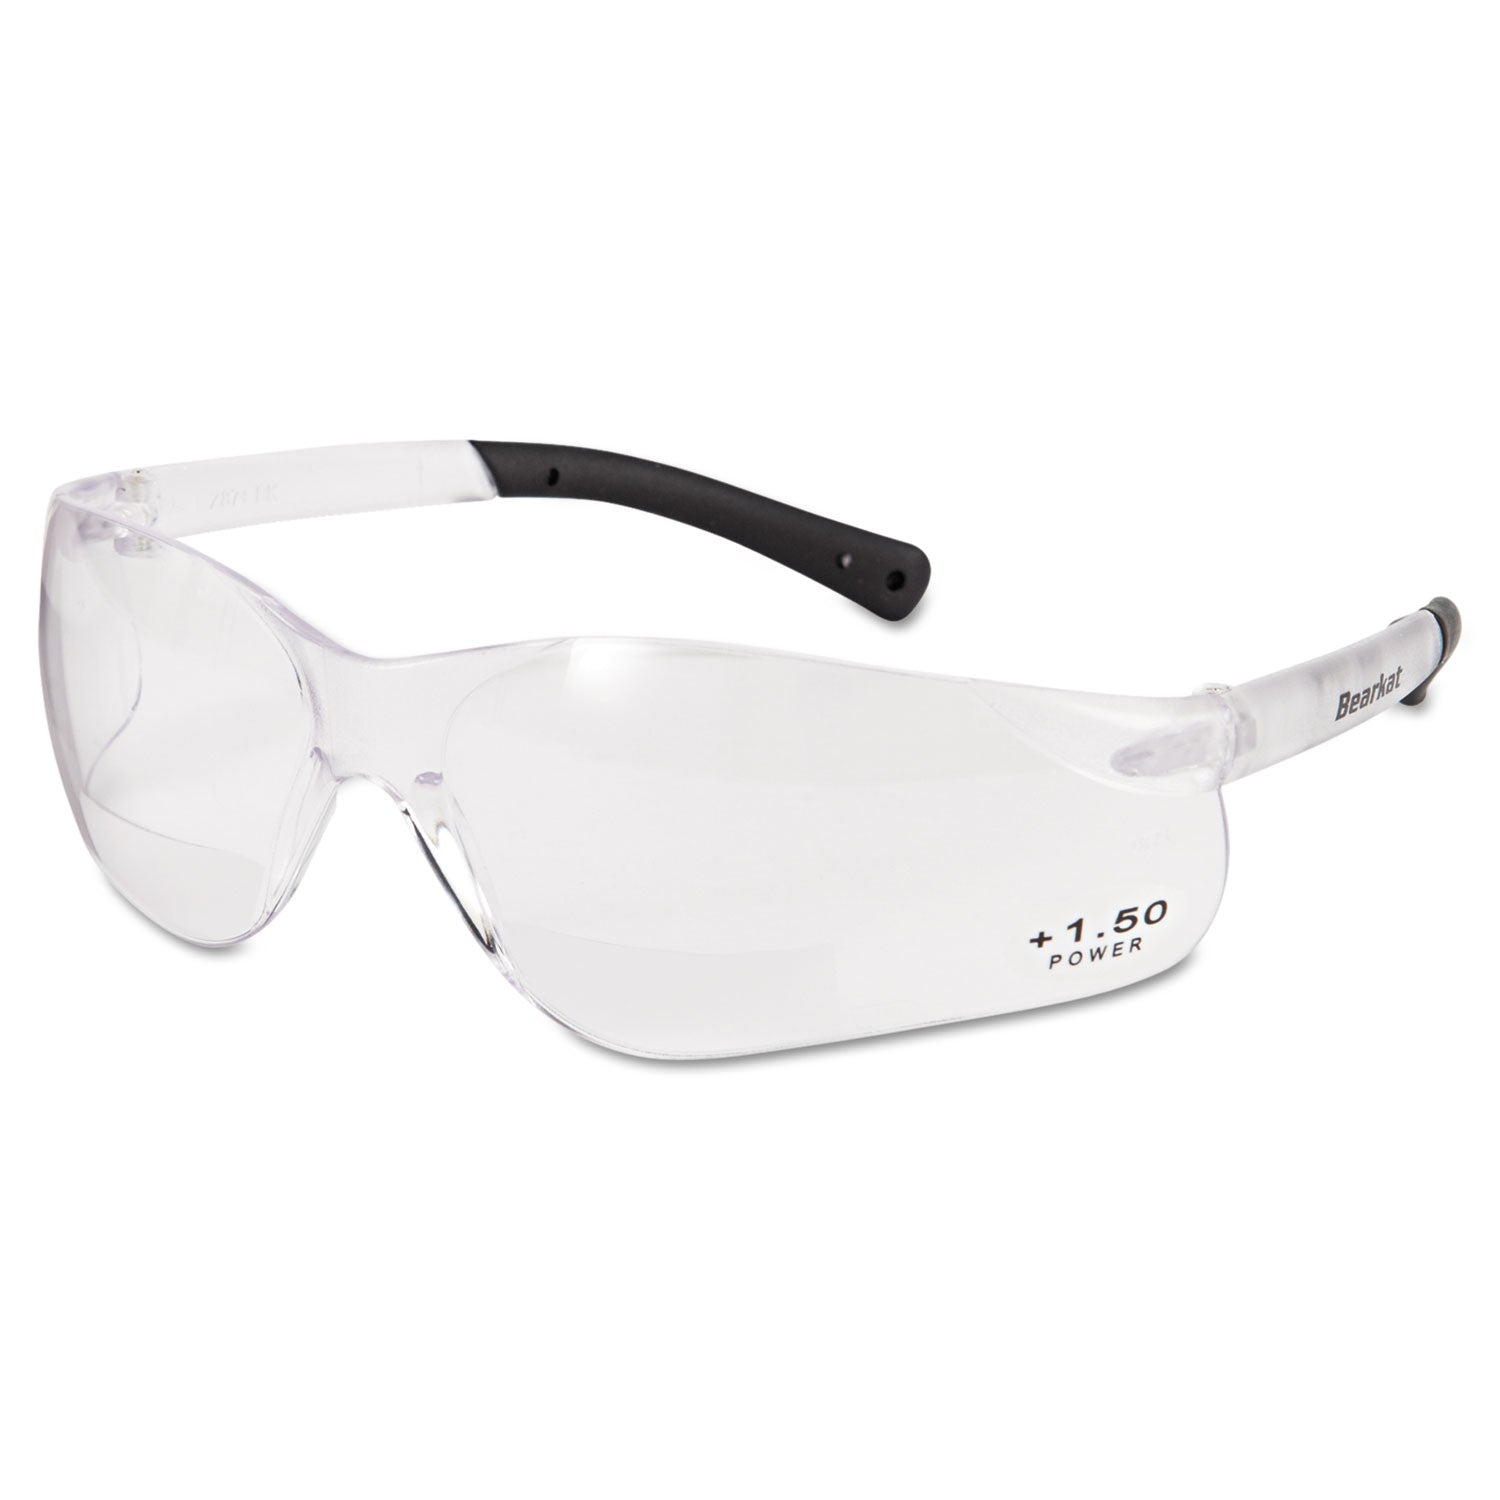 BearKat Magnifier Safety Glasses, Clear Frame, Clear Lens - 